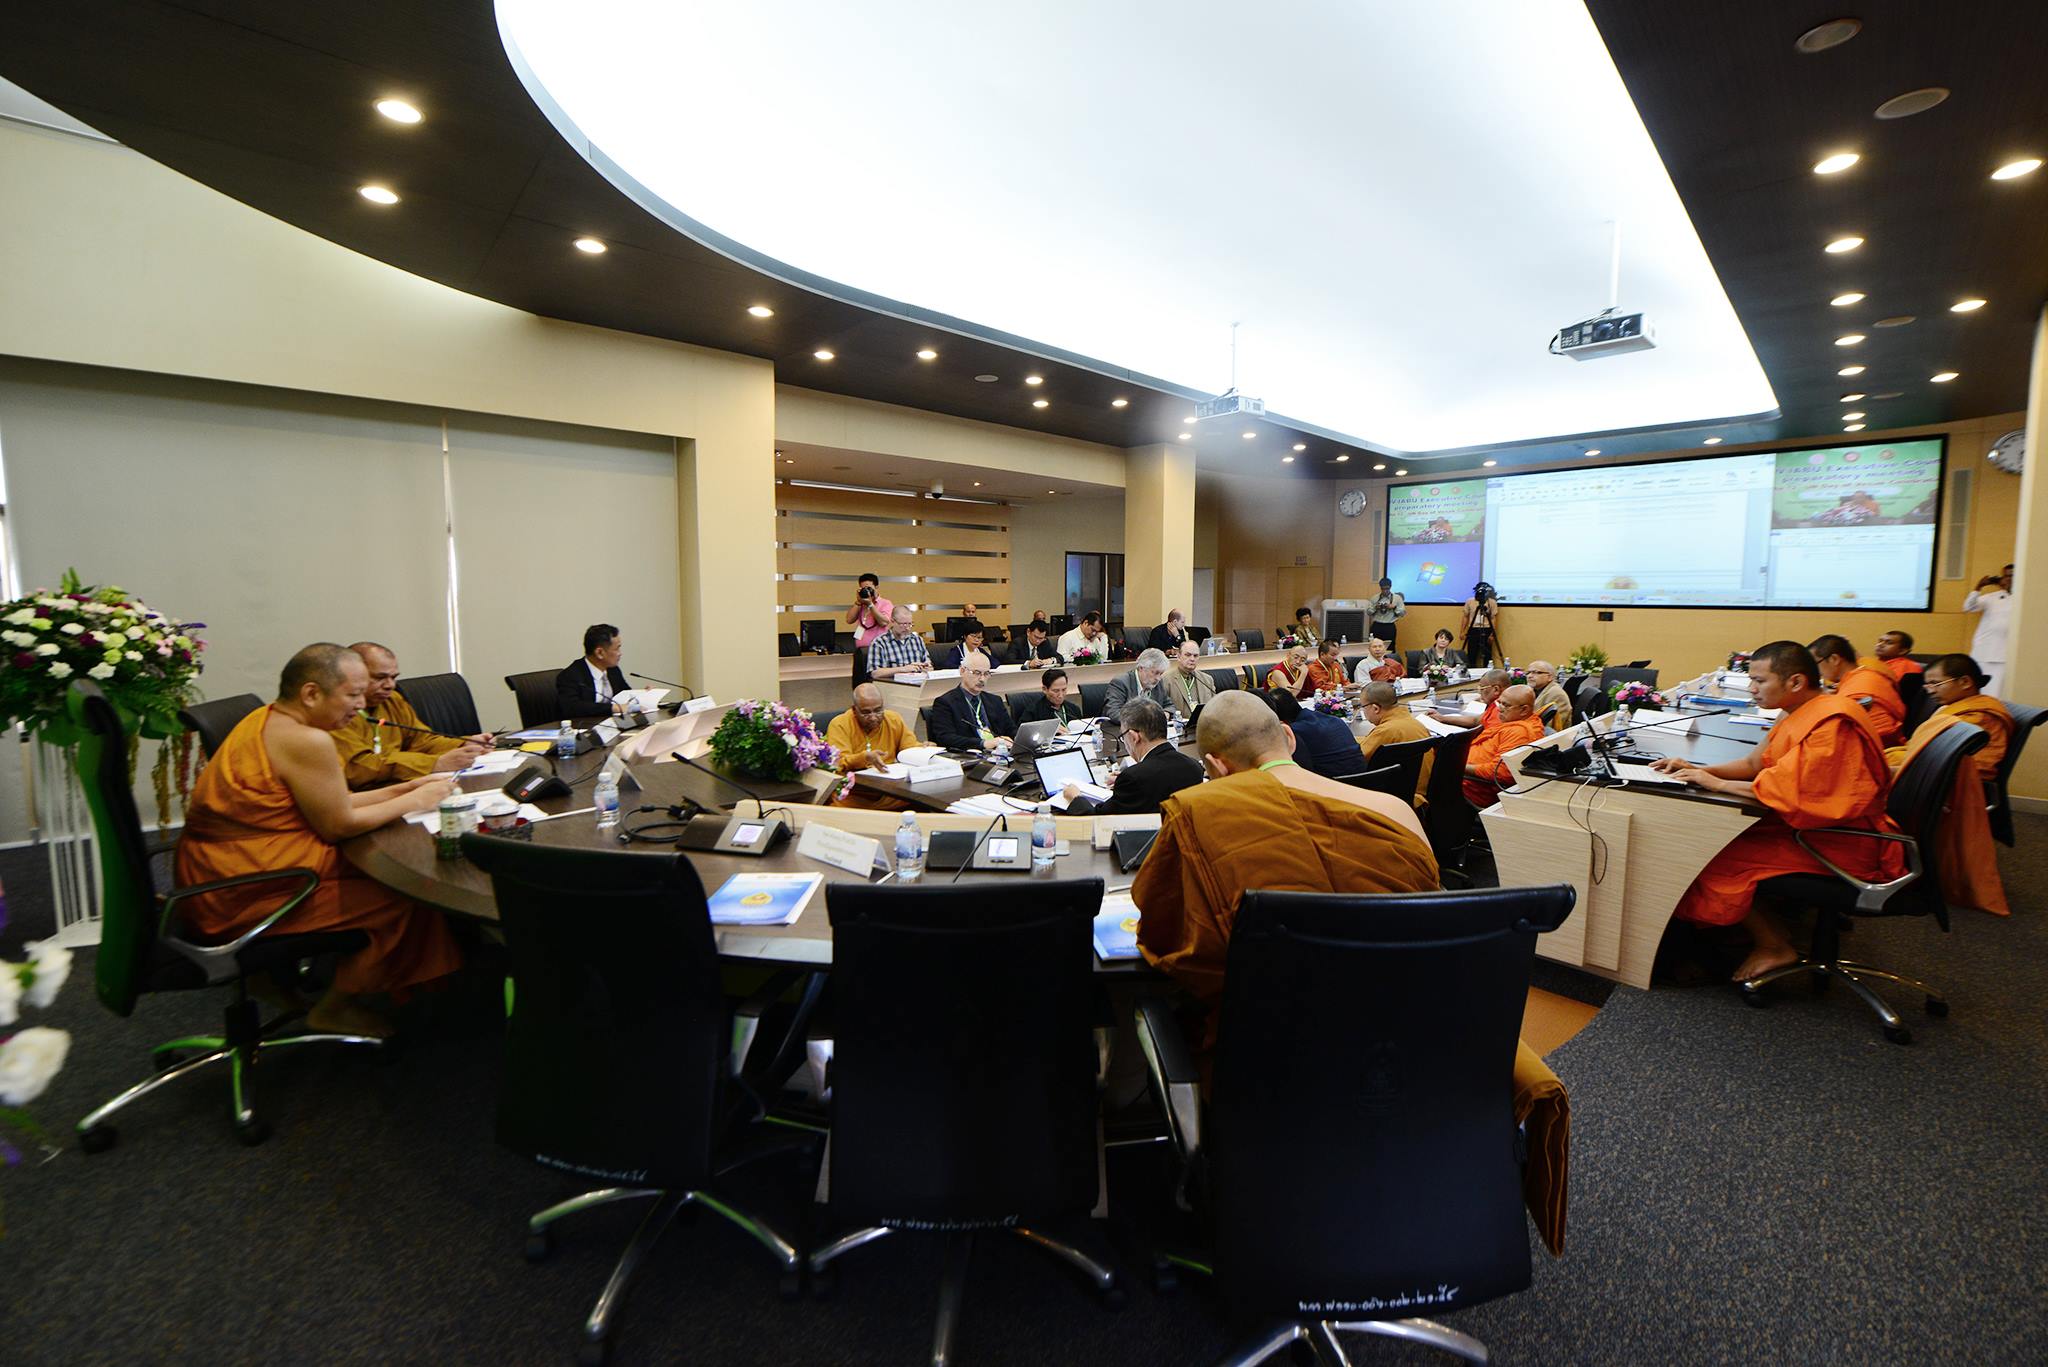 International Association of Buddhist Universities (IABU) Executive Council preparatory meeting